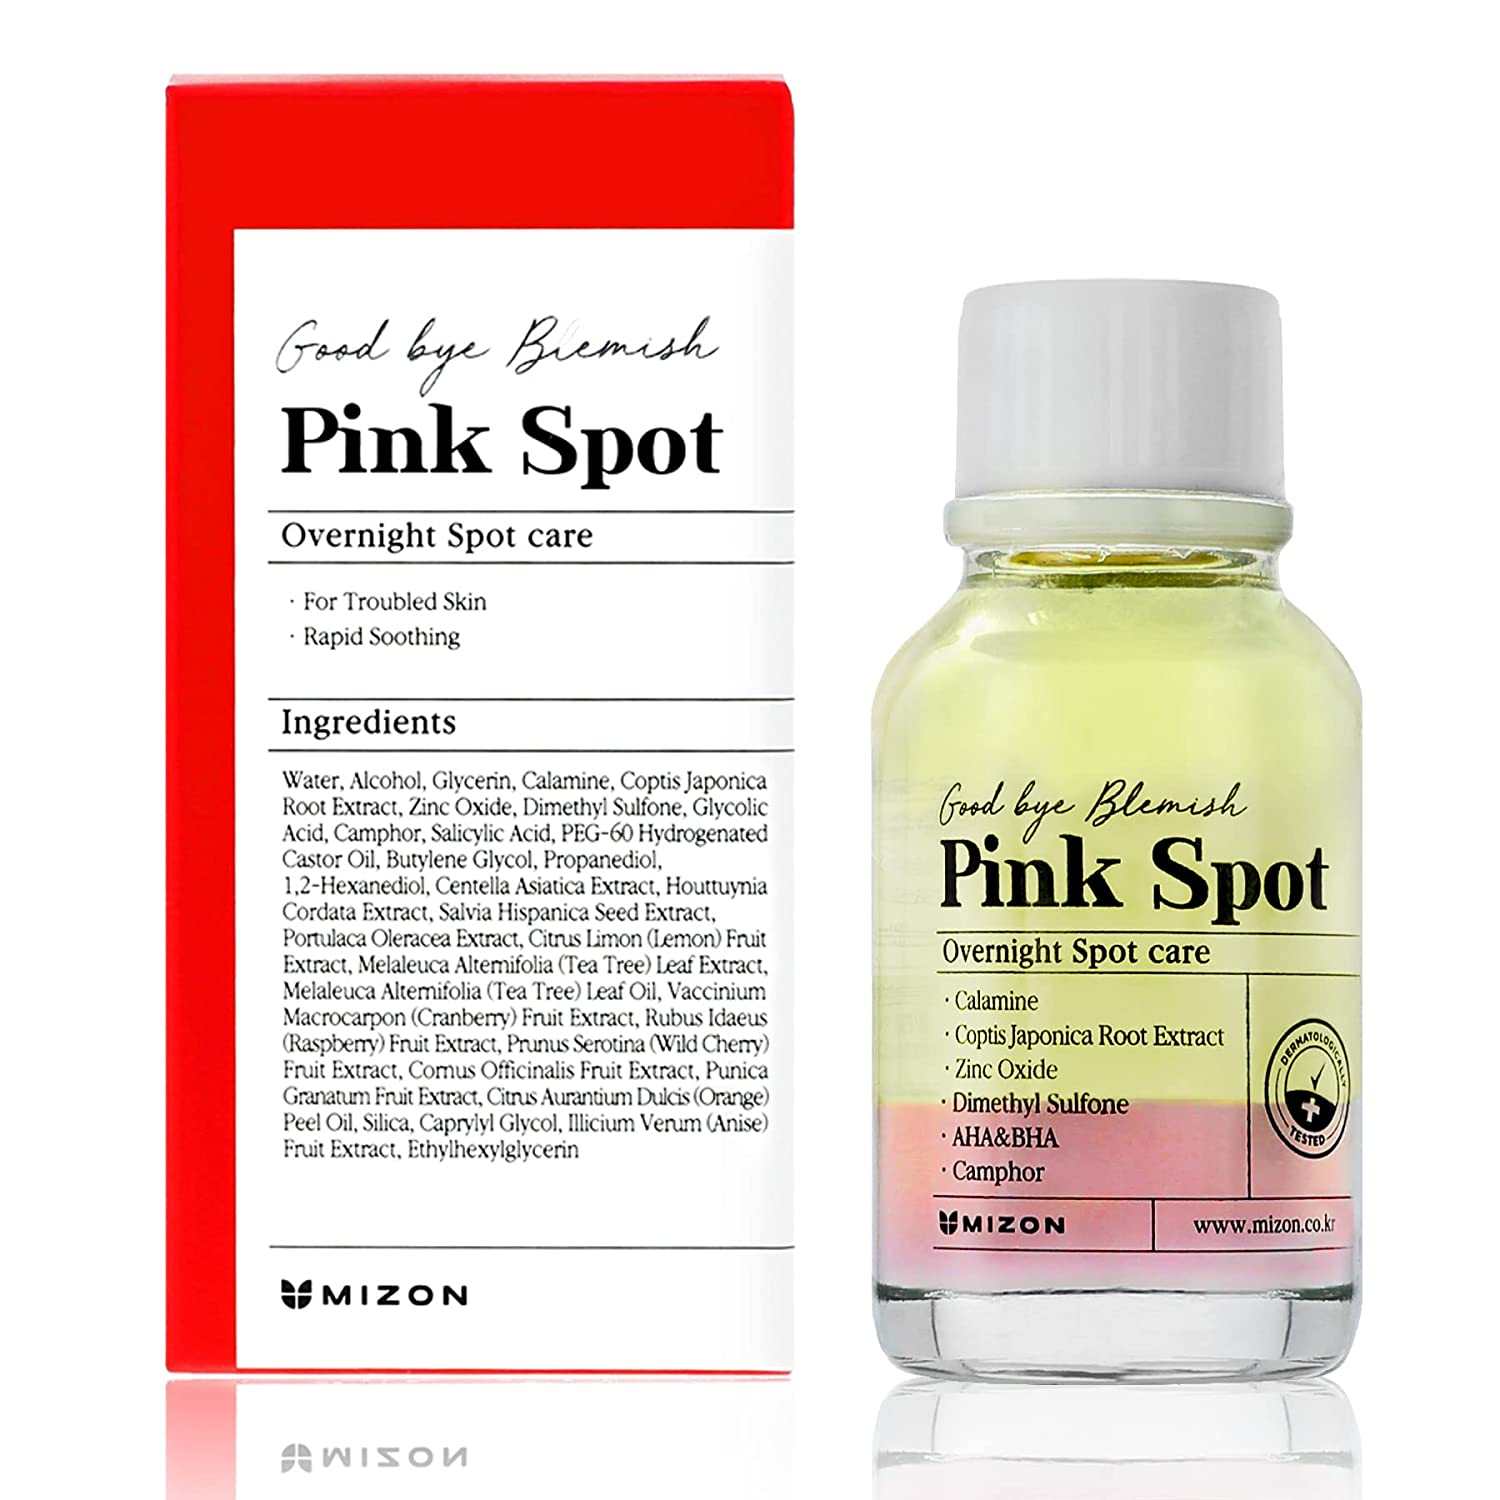 MIZON Pink Spot Overnight Spot Care علاج موضعي للحبوب من ميزون بالاصدار المطور